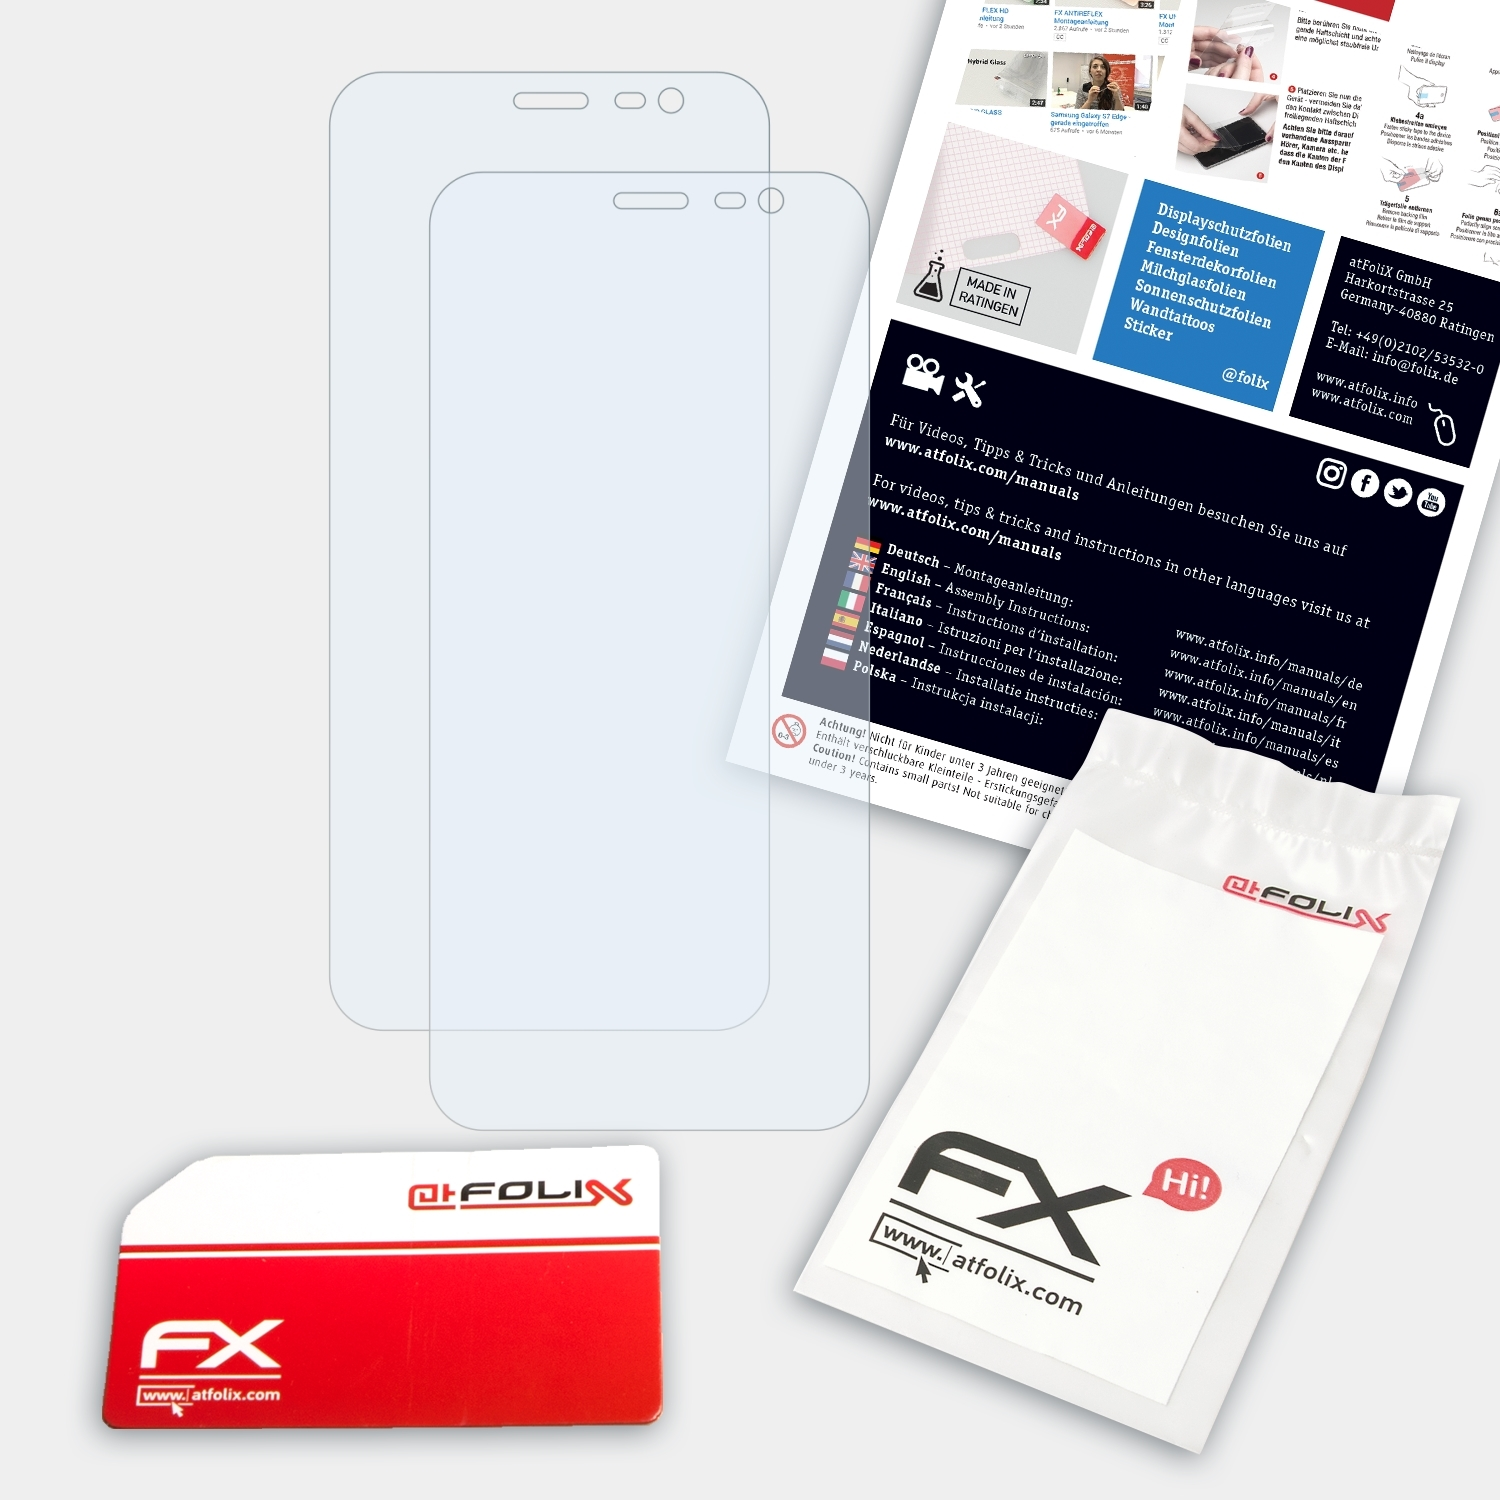 A77) 2x Pax FX-Clear Displayschutz(für ATFOLIX